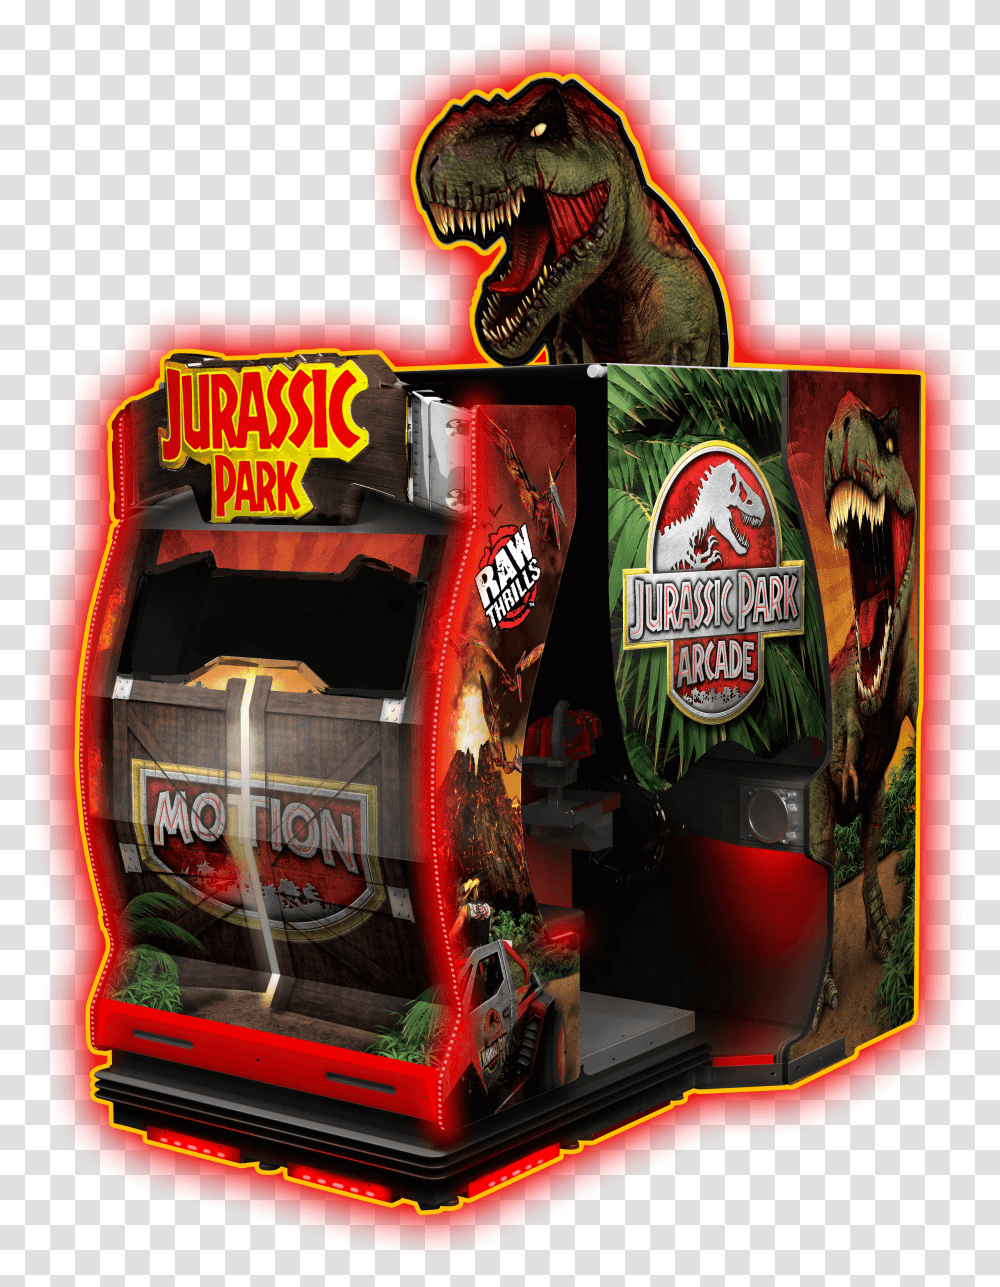 Jurassic Park Arcade Game Jurassic Park Arcade Game Transparent Png